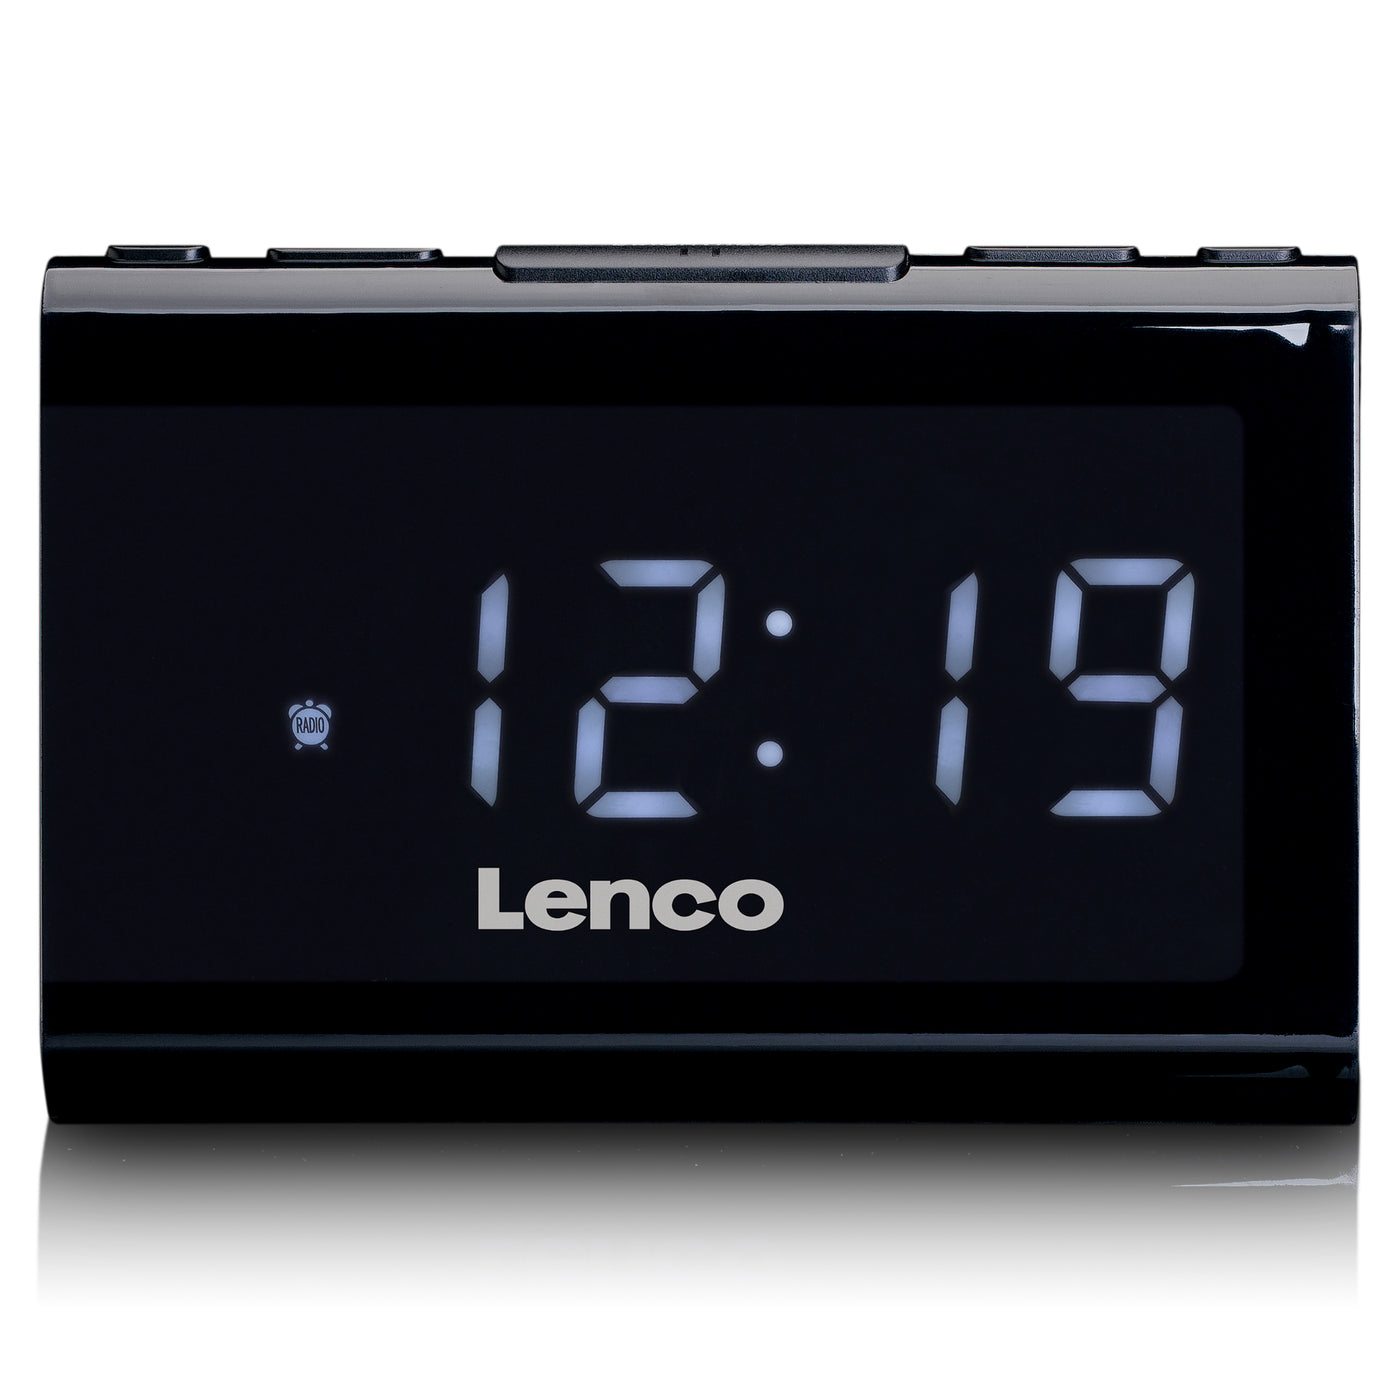 Lenco CR-525 - Clockradio with USB player